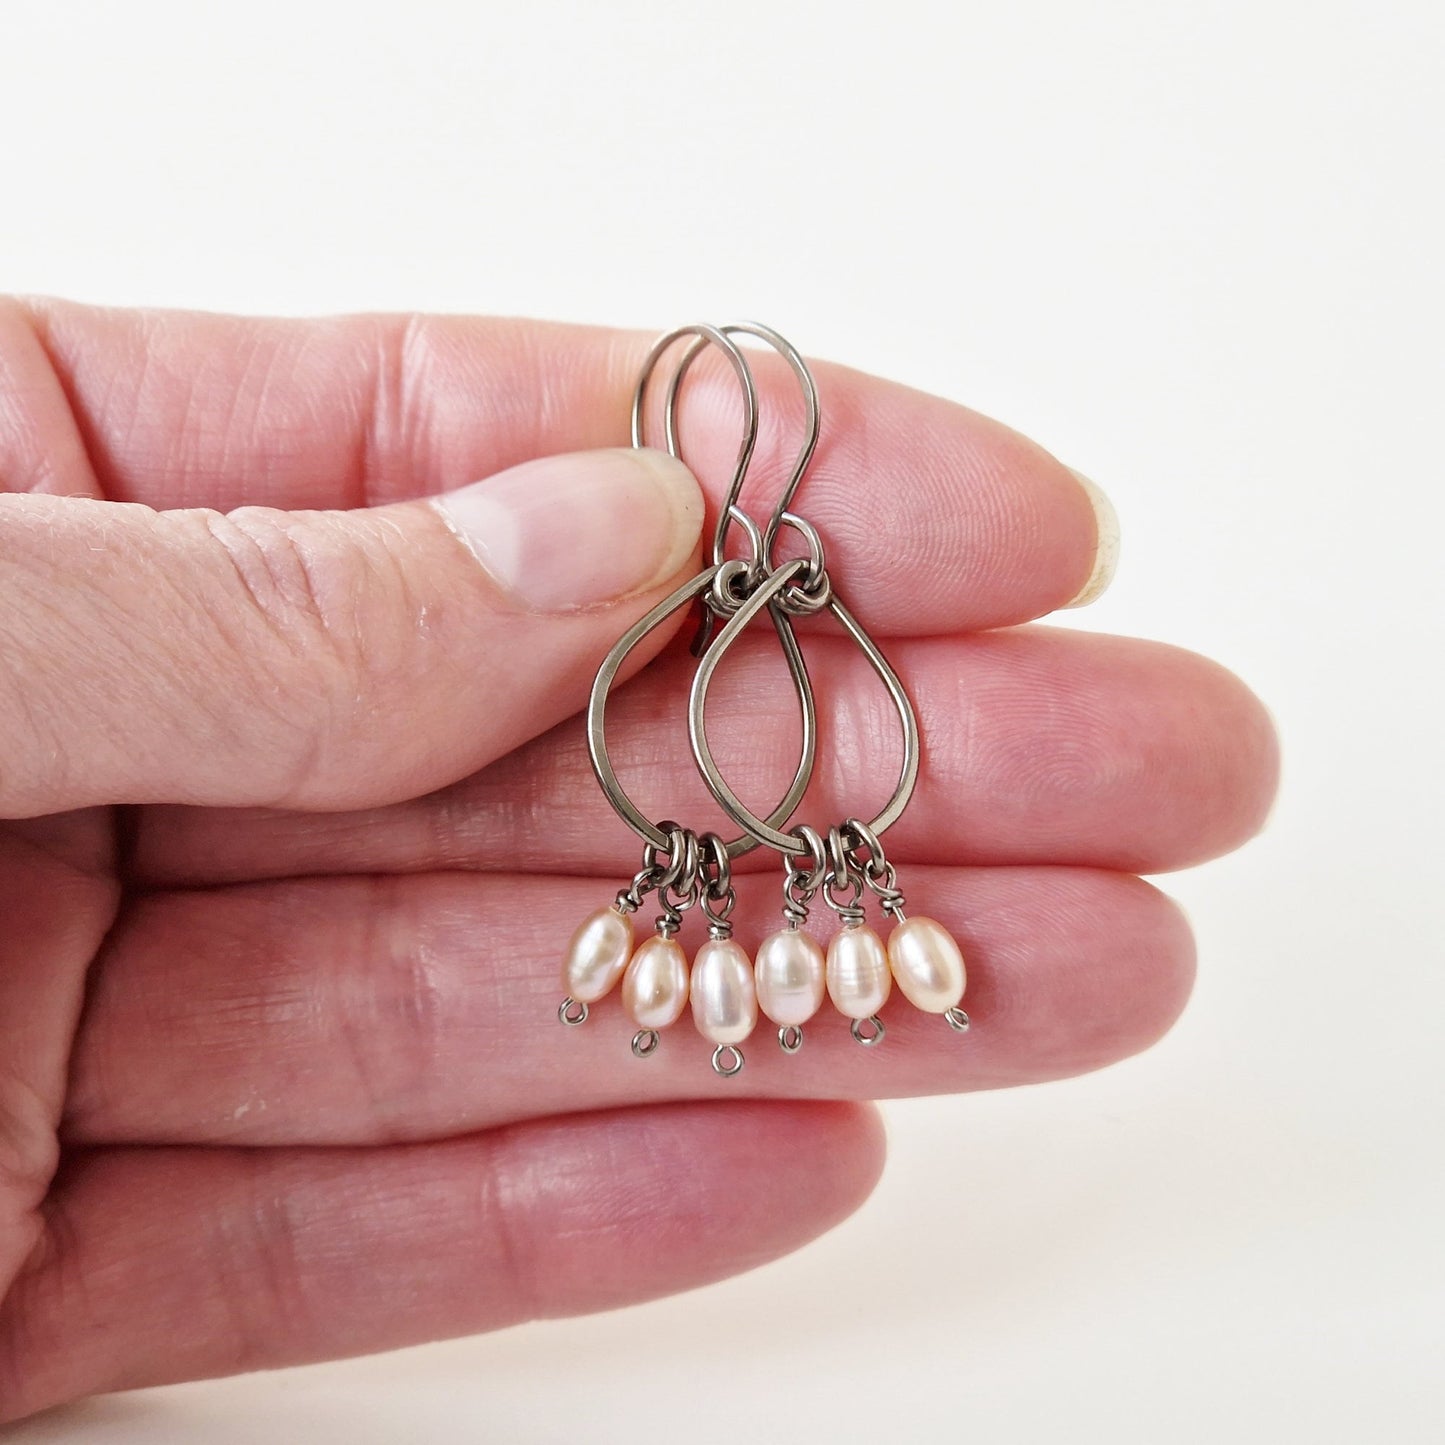 Hypoallergenic Teardrop Earrings with Pink Pearls